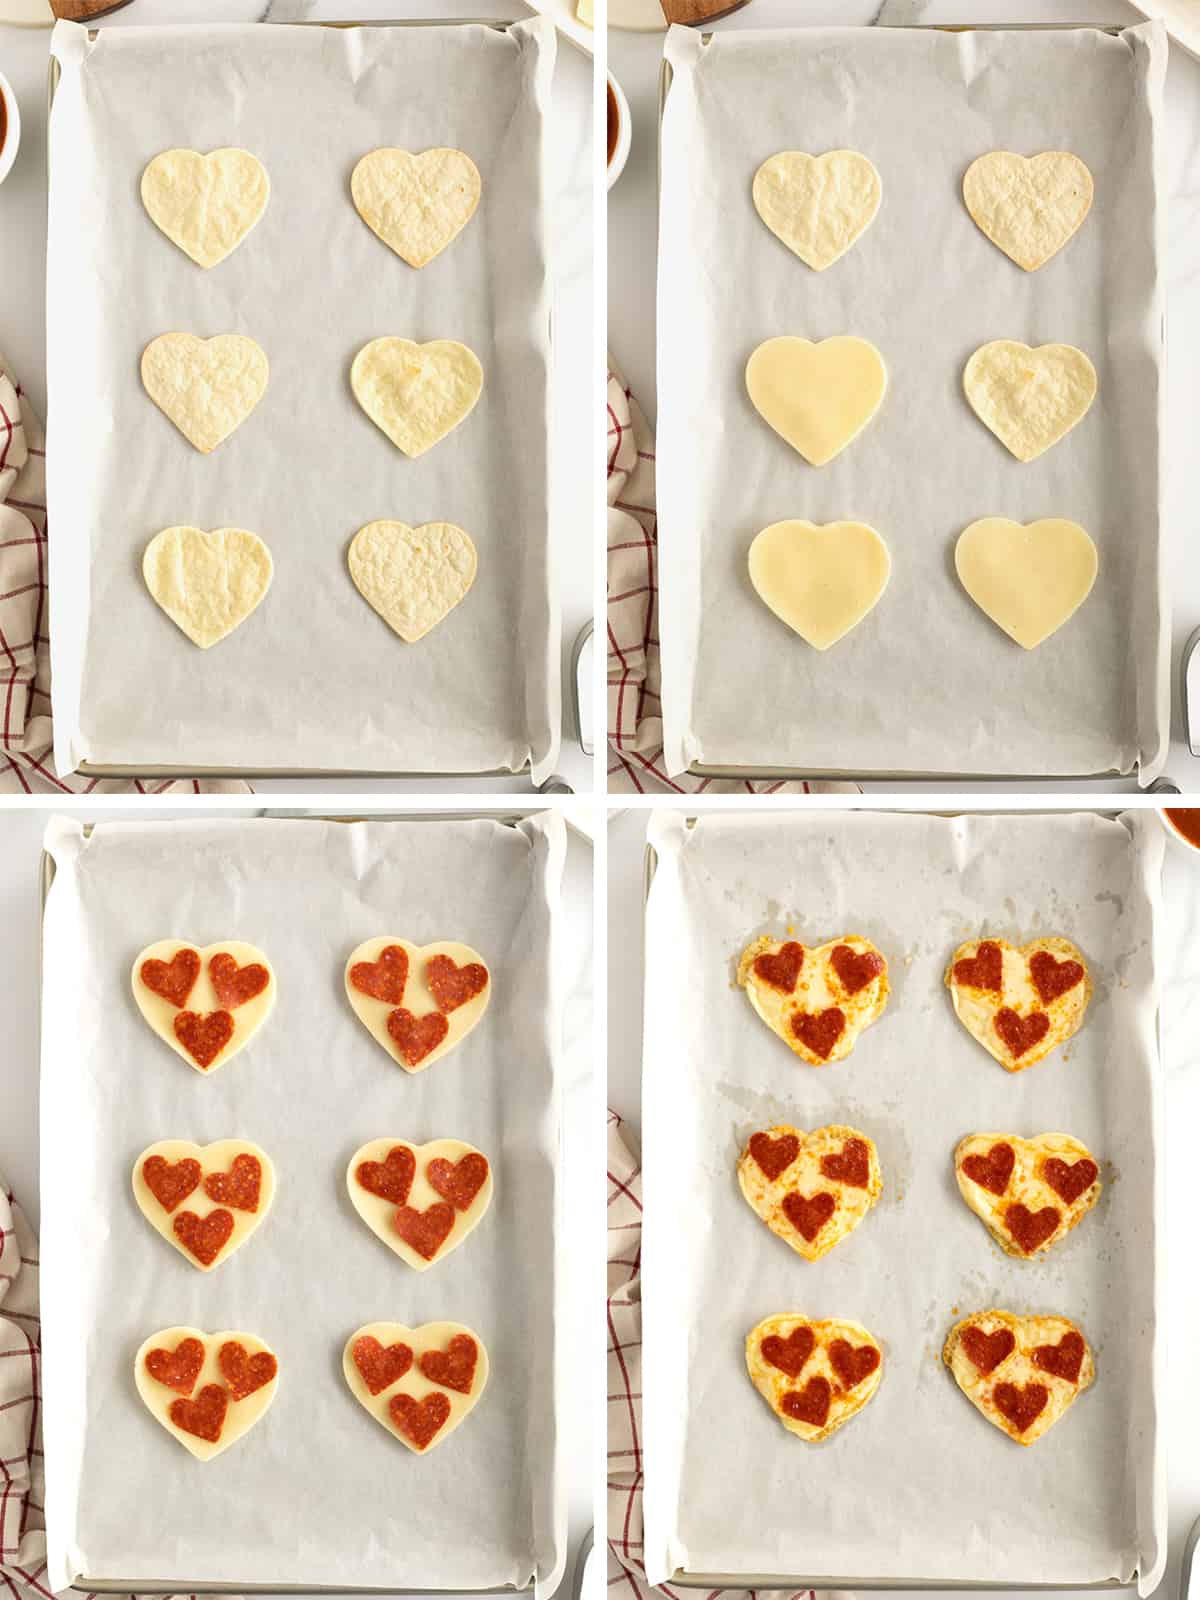 Heart Shaped Tortilla Pizzas by The BakerMama